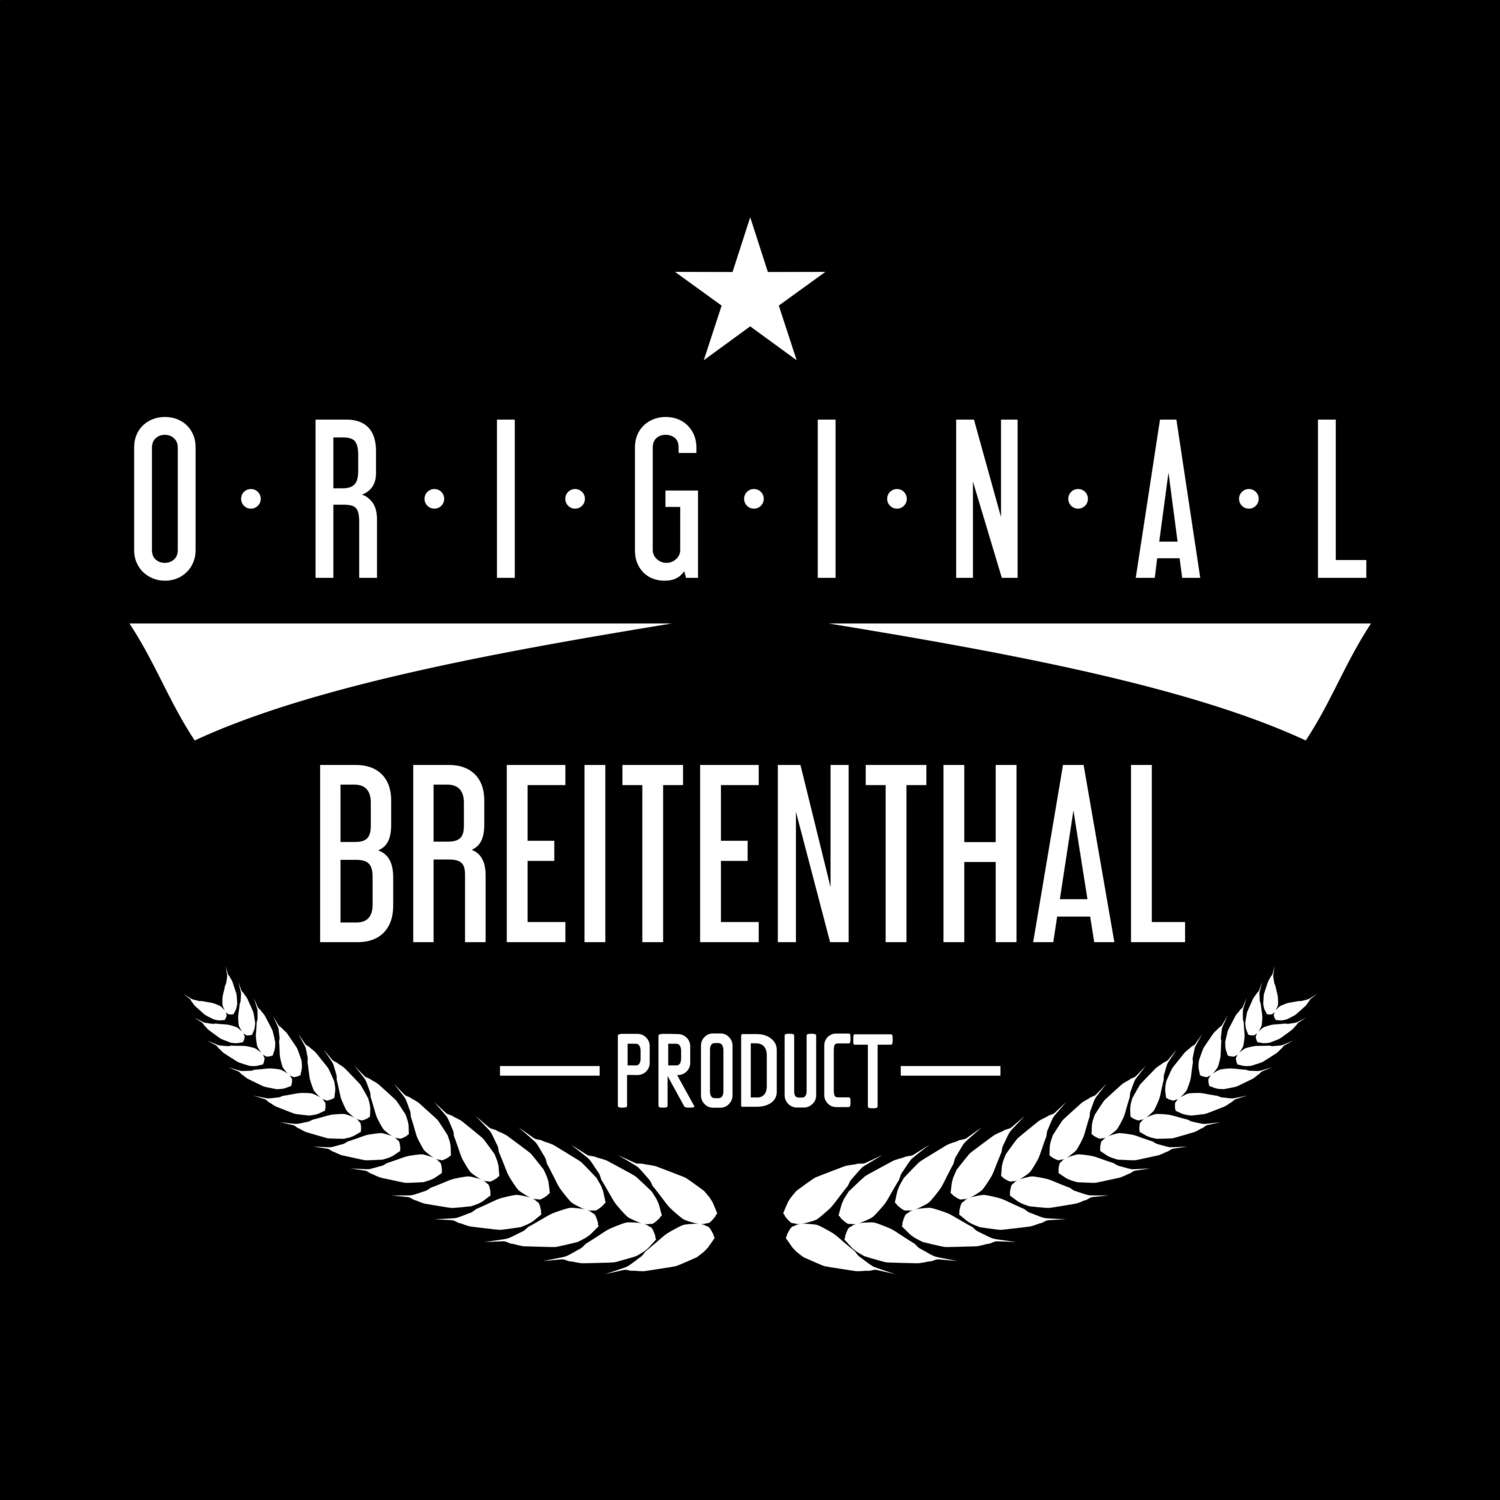 Breitenthal T-Shirt »Original Product«